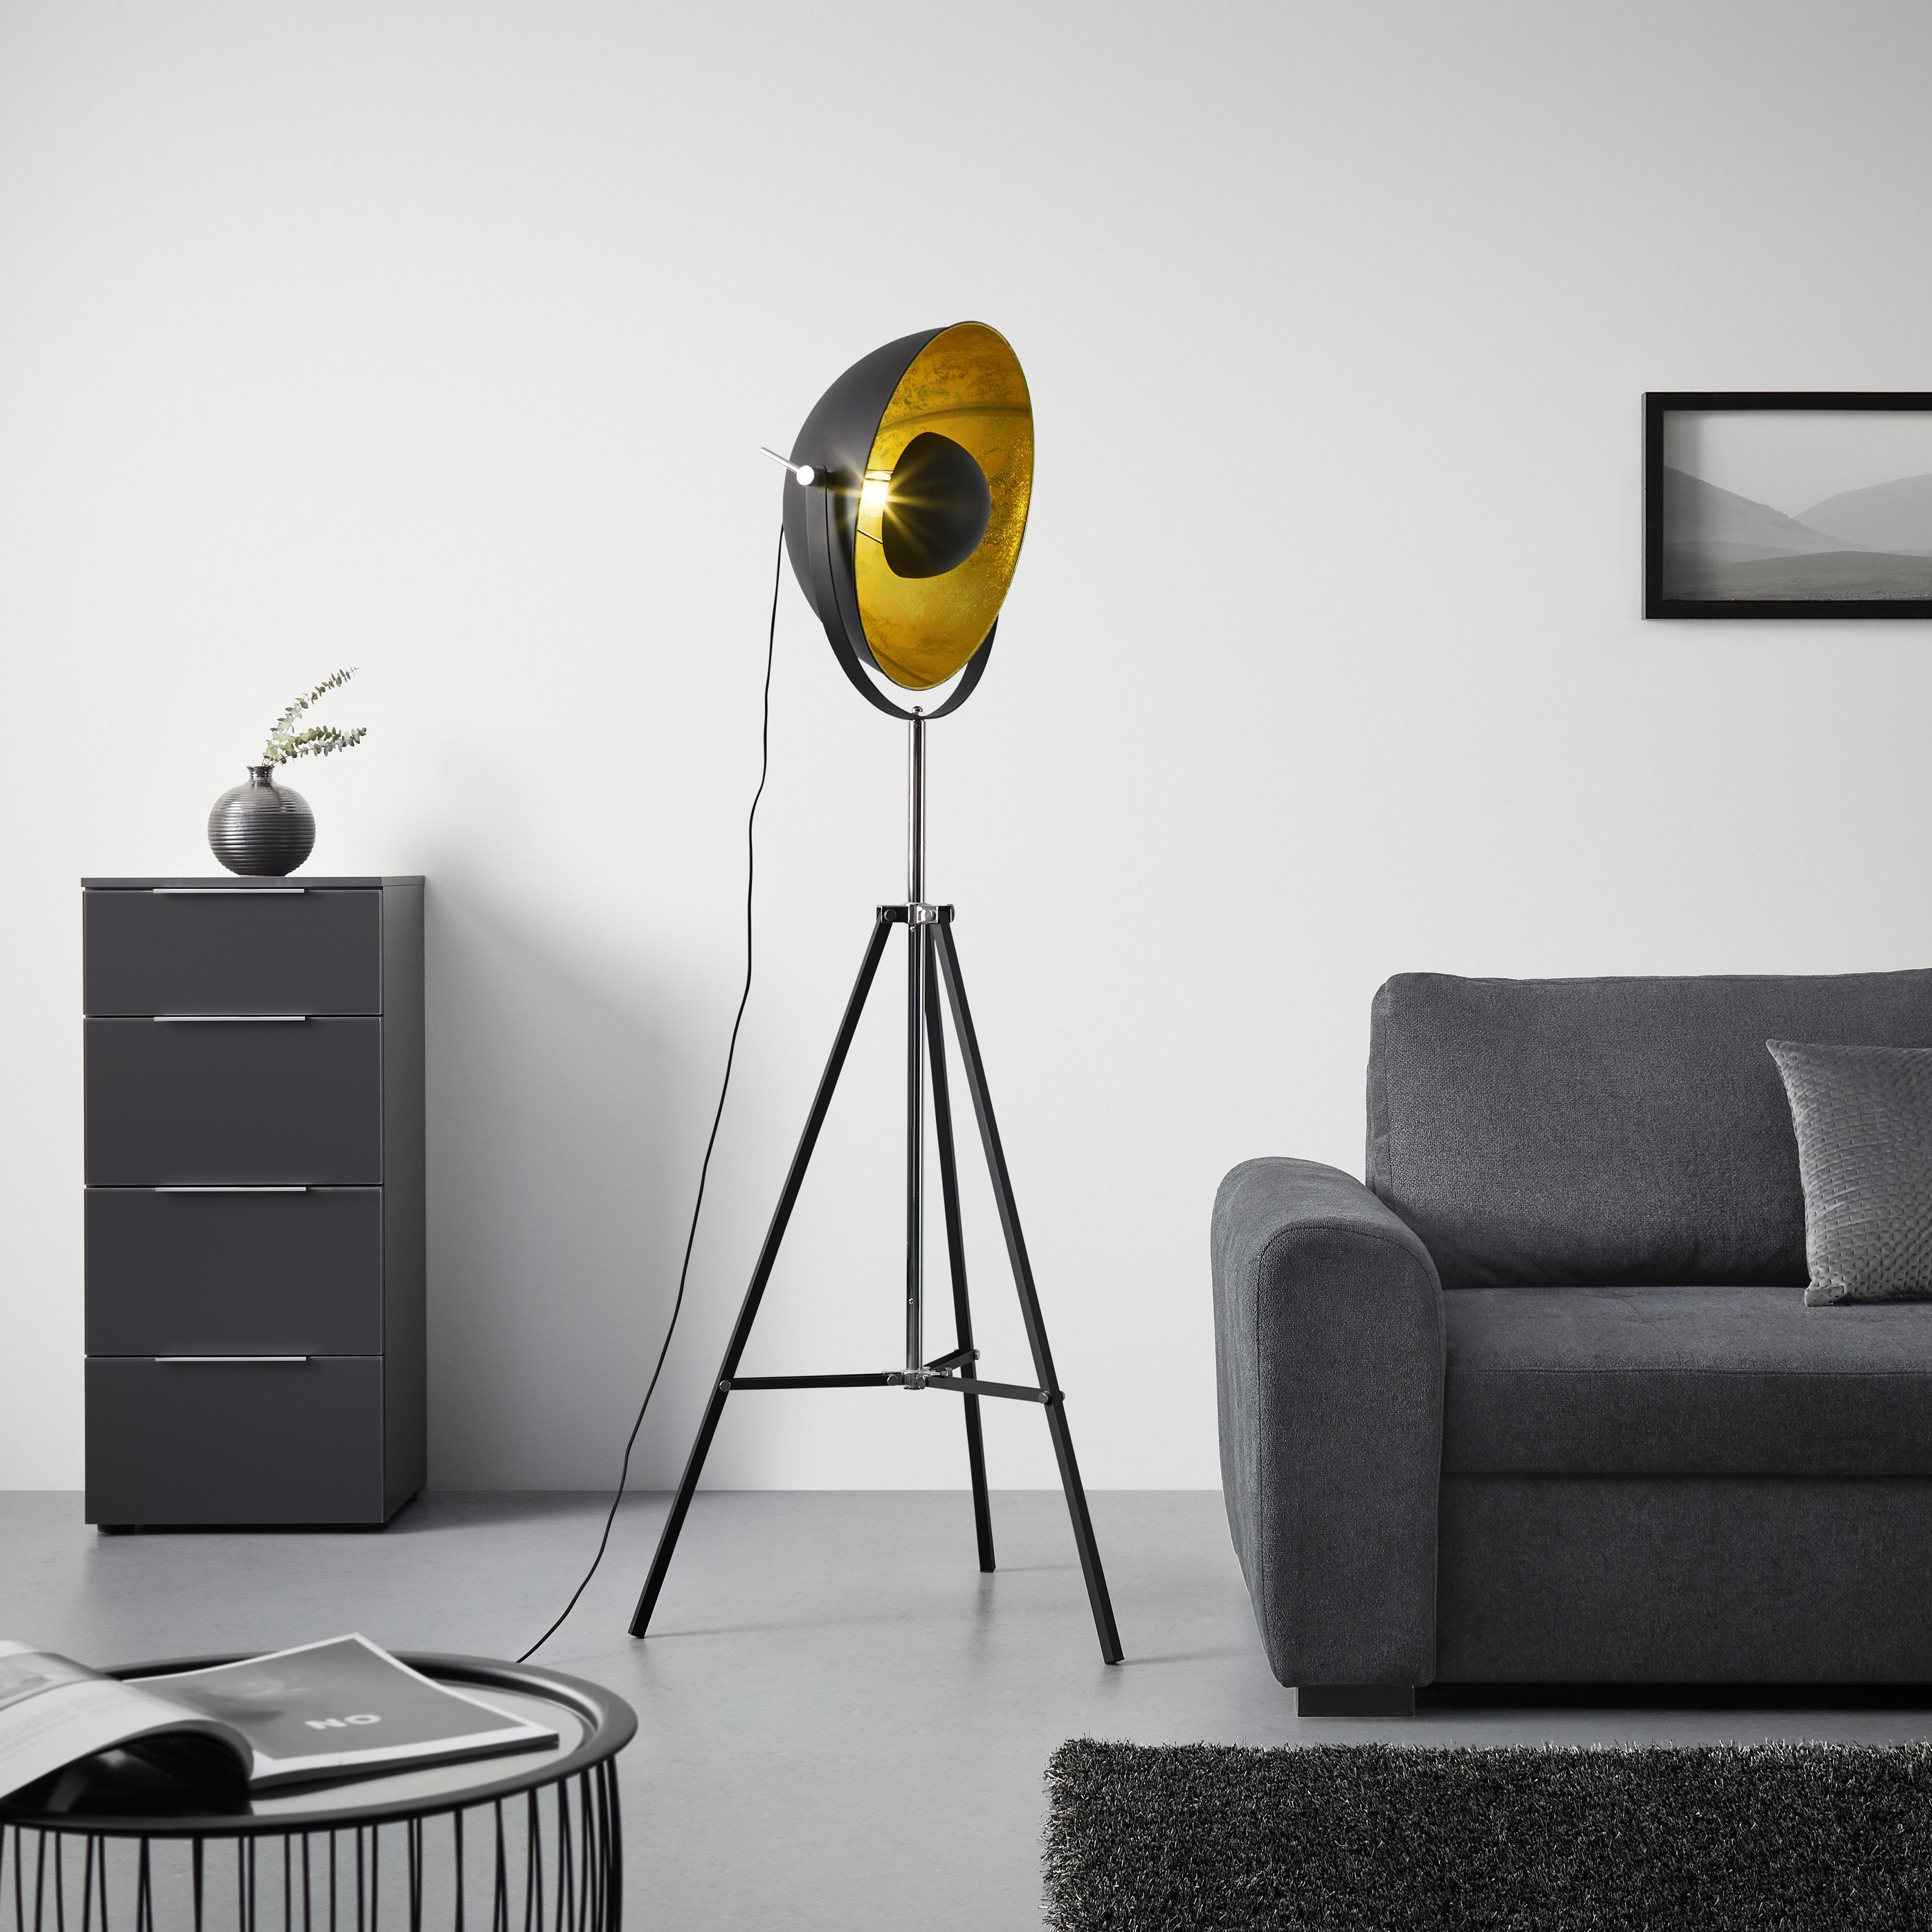 Stojací Lampa Jule V: 176cm, 60 Watt - černá/barvy zlata, Lifestyle, kov (50/176cm) - Modern Living